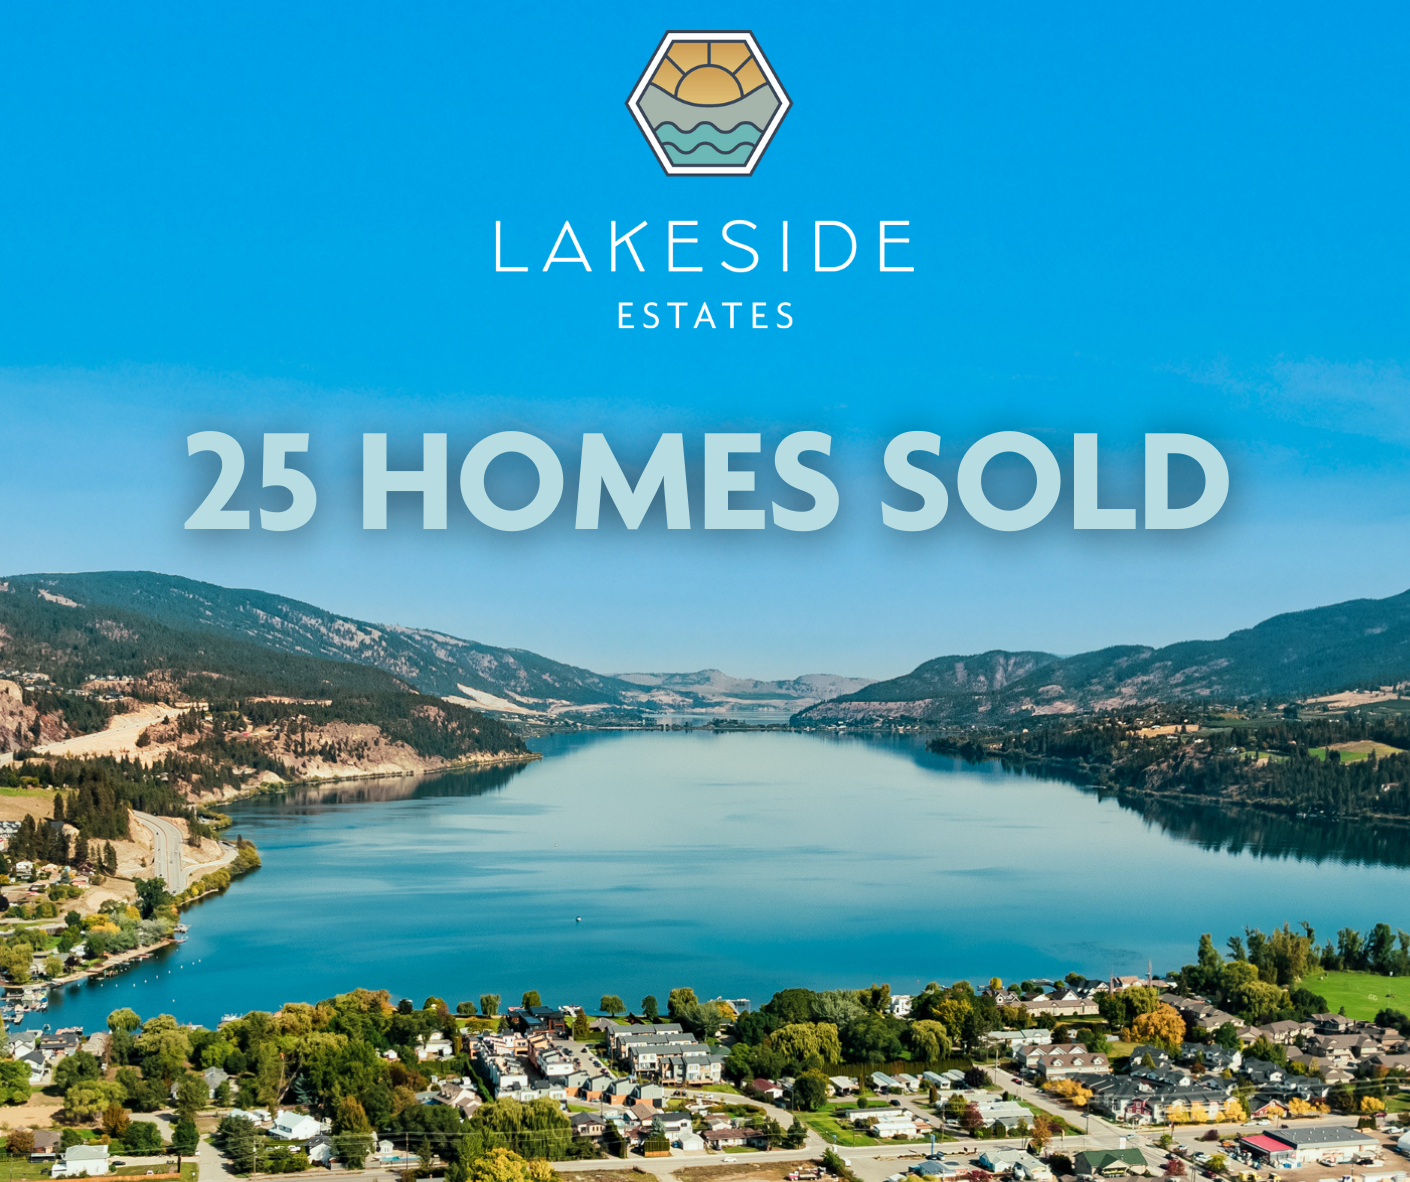 Lakeside Estates 25 homes sold